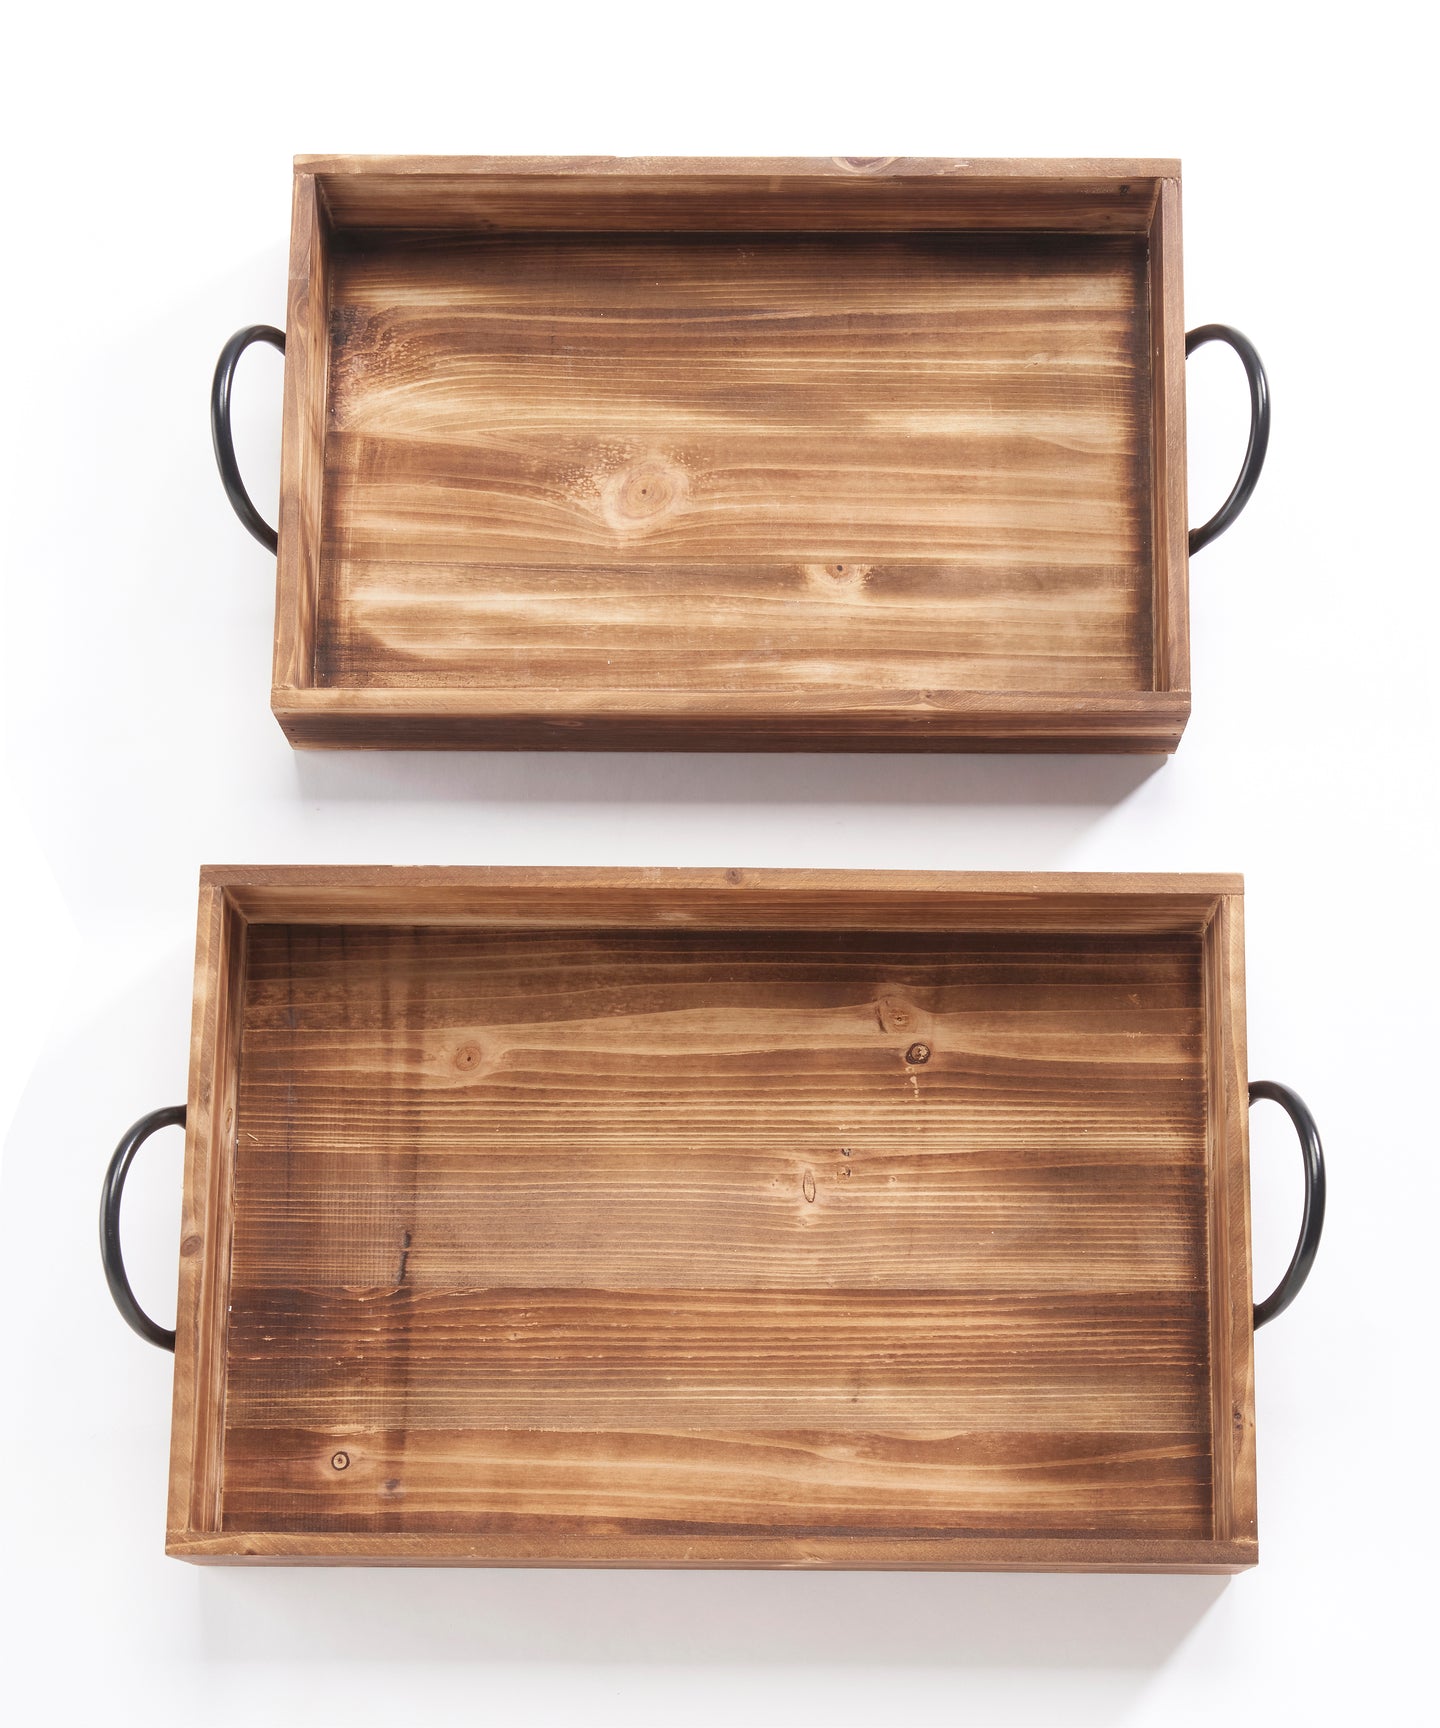 Gift Craft Wood Tray w/Metal Handle  Set of 2 095726